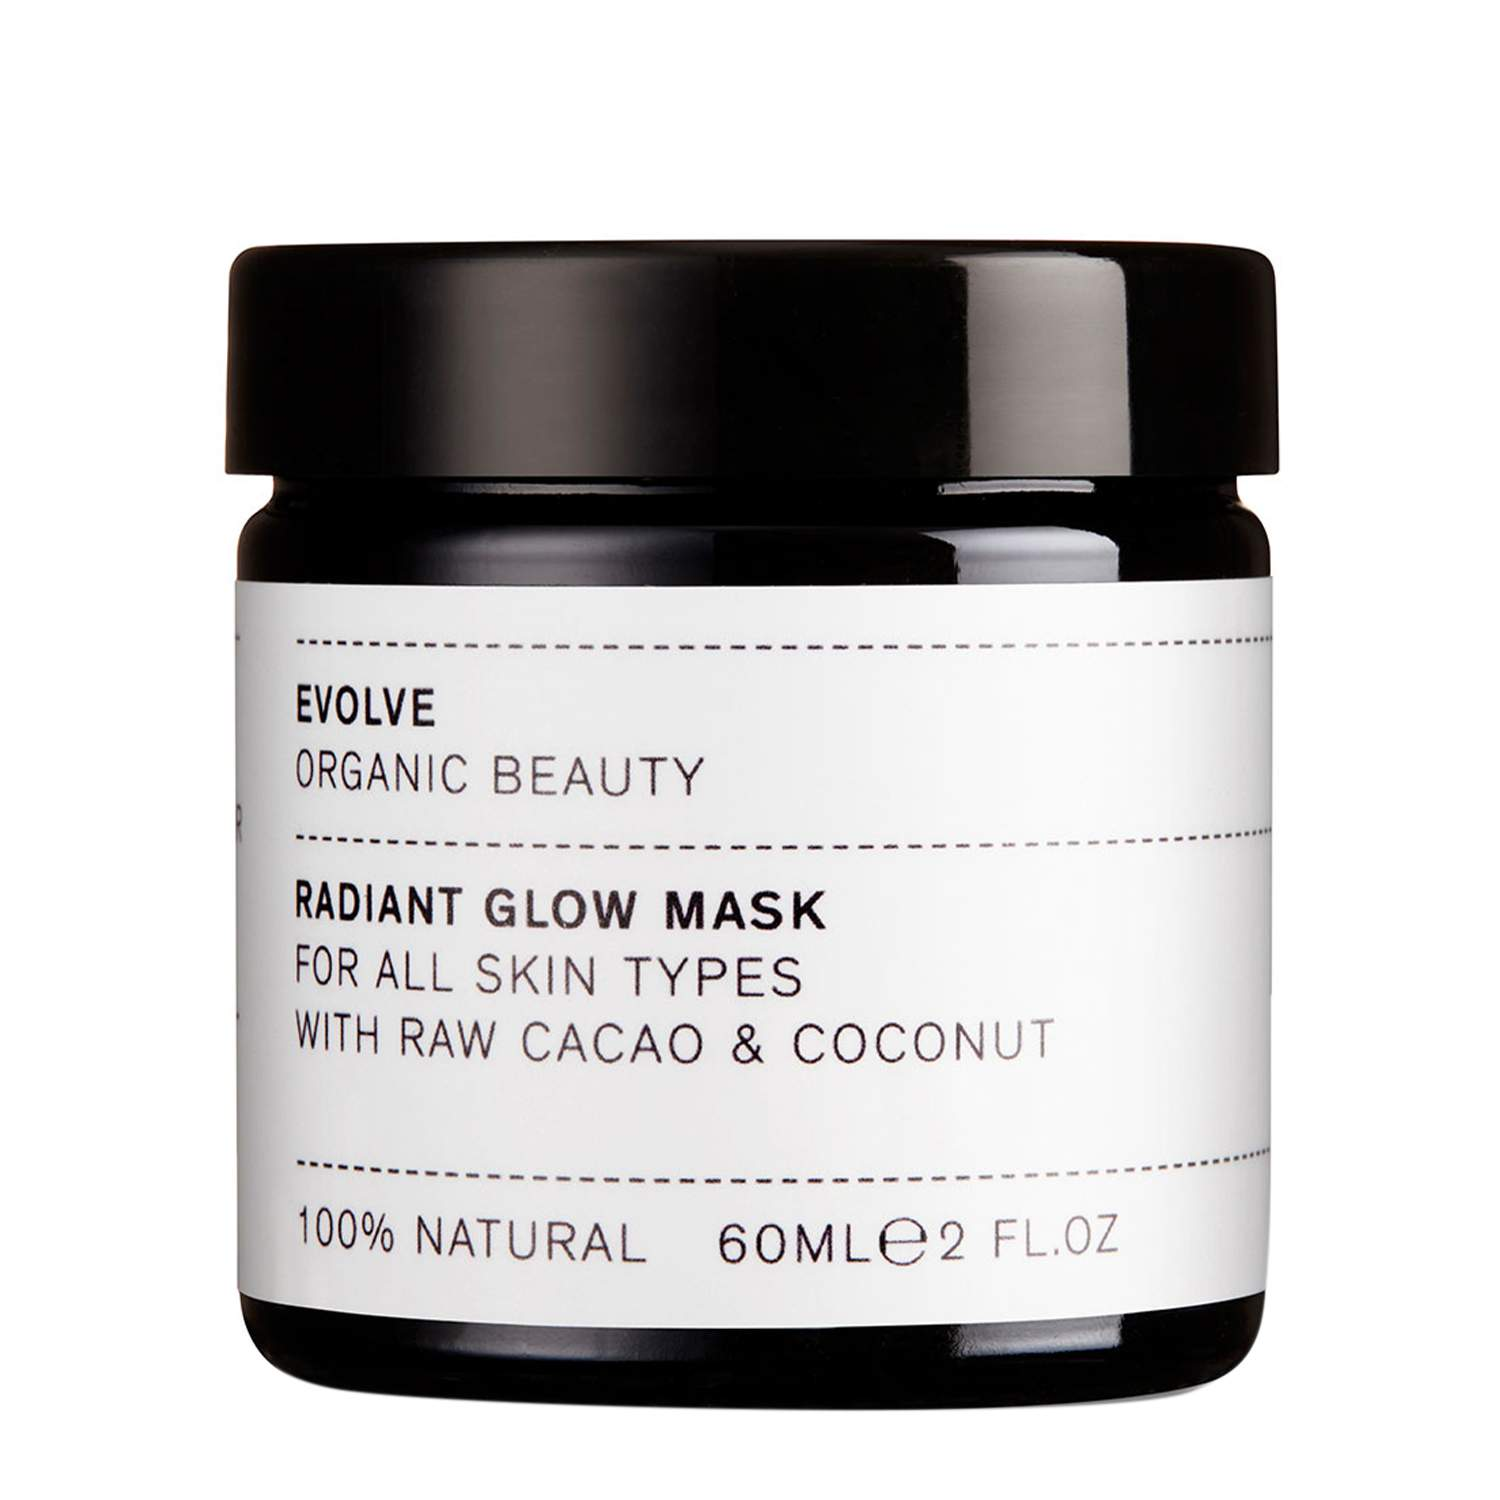 Evolve Organic Beauty Radiant Glow Mask Evolve Organic Beauty Radiant Glow Mask 1